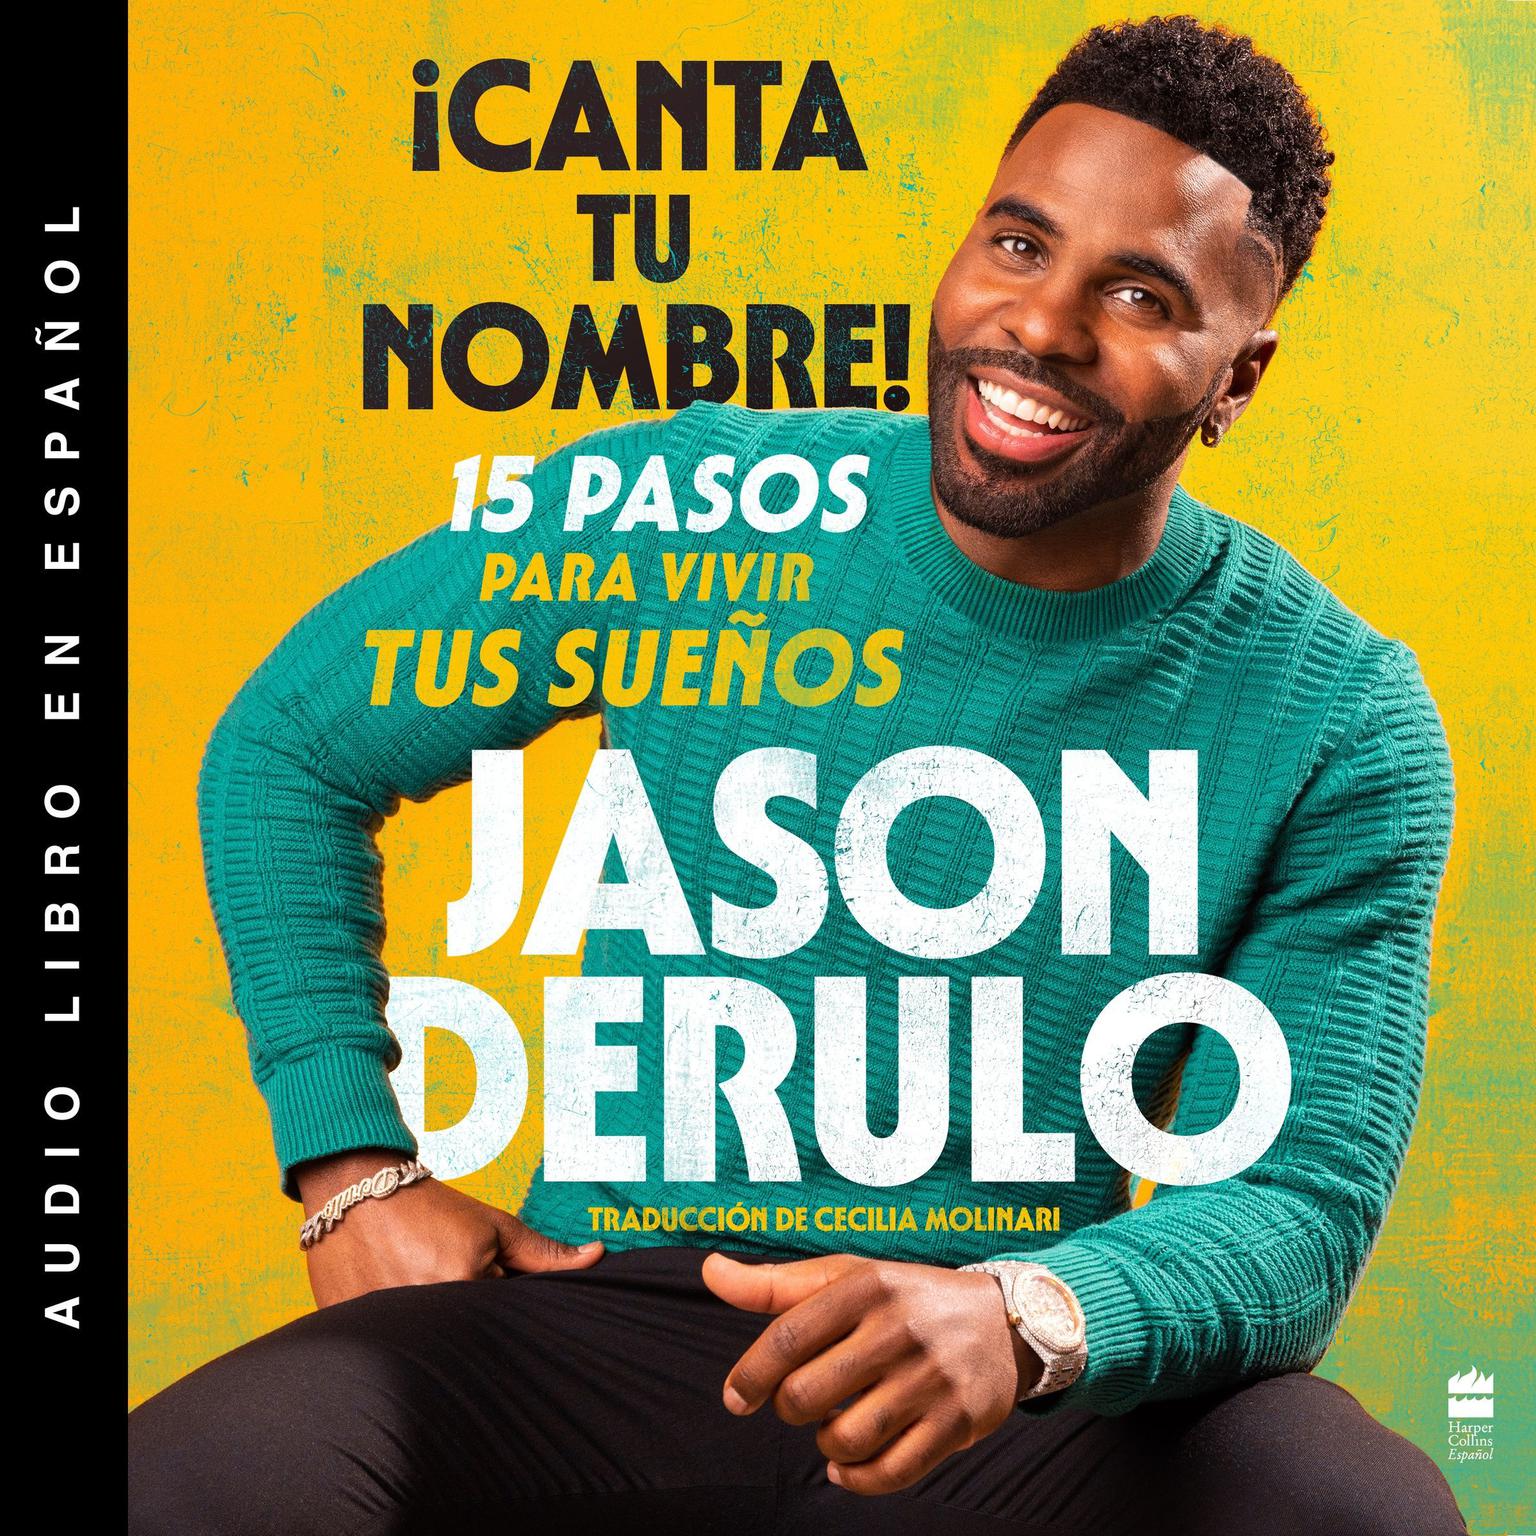 Sing Your Name Out Loud / iCanta tu nombre! (Spanish edition): 15 pasos para vivir tus suenos Audiobook, by Jason Derulo